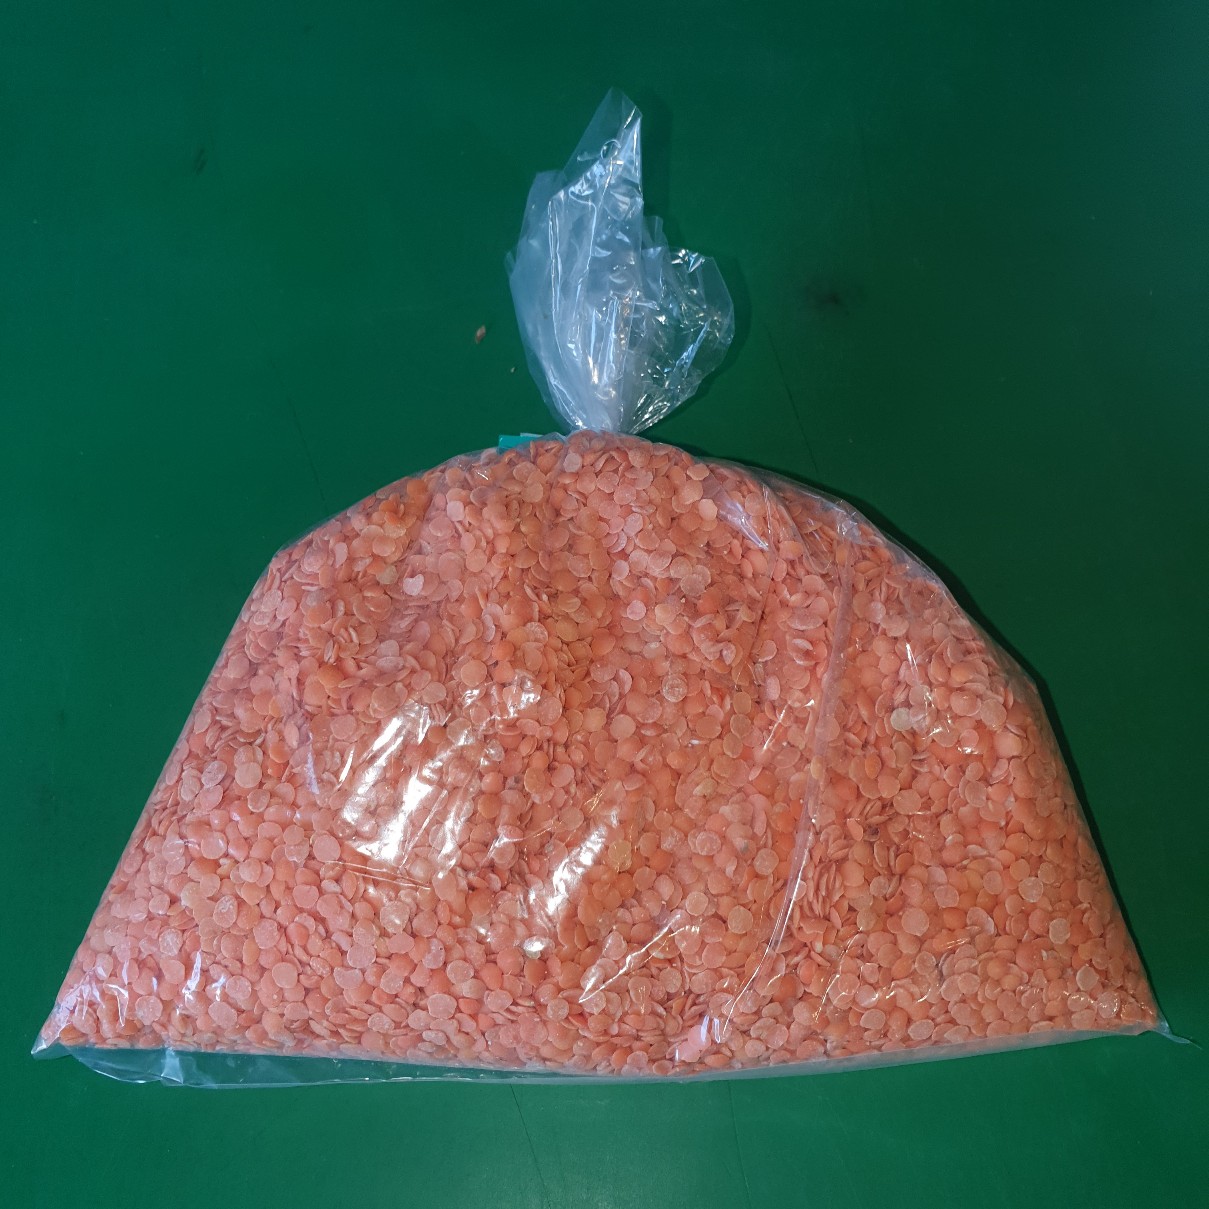 Fresh Red lentils 0.5kg bag - £ 1.60  per bag